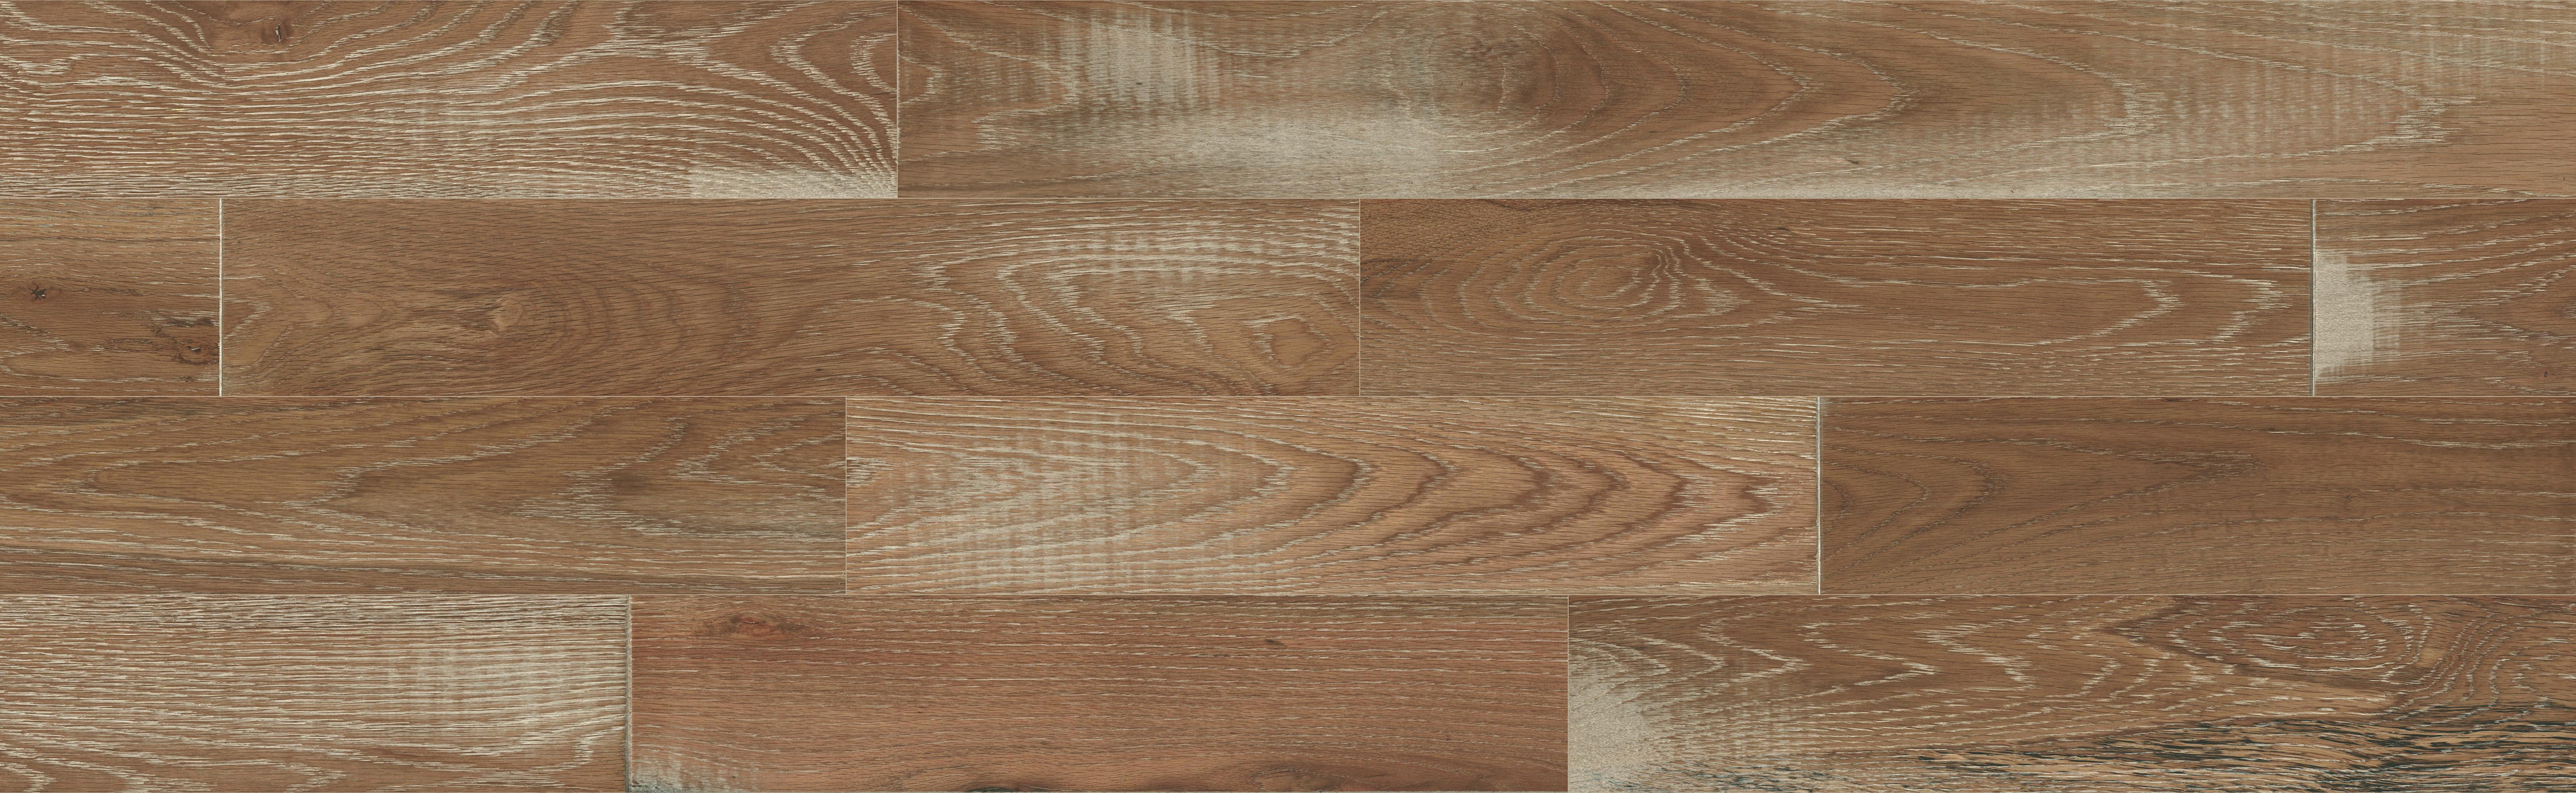 wholesale hardwood flooring suppliers of mullican castillian oak latte 5 wide solid hardwood flooring within file 448 3